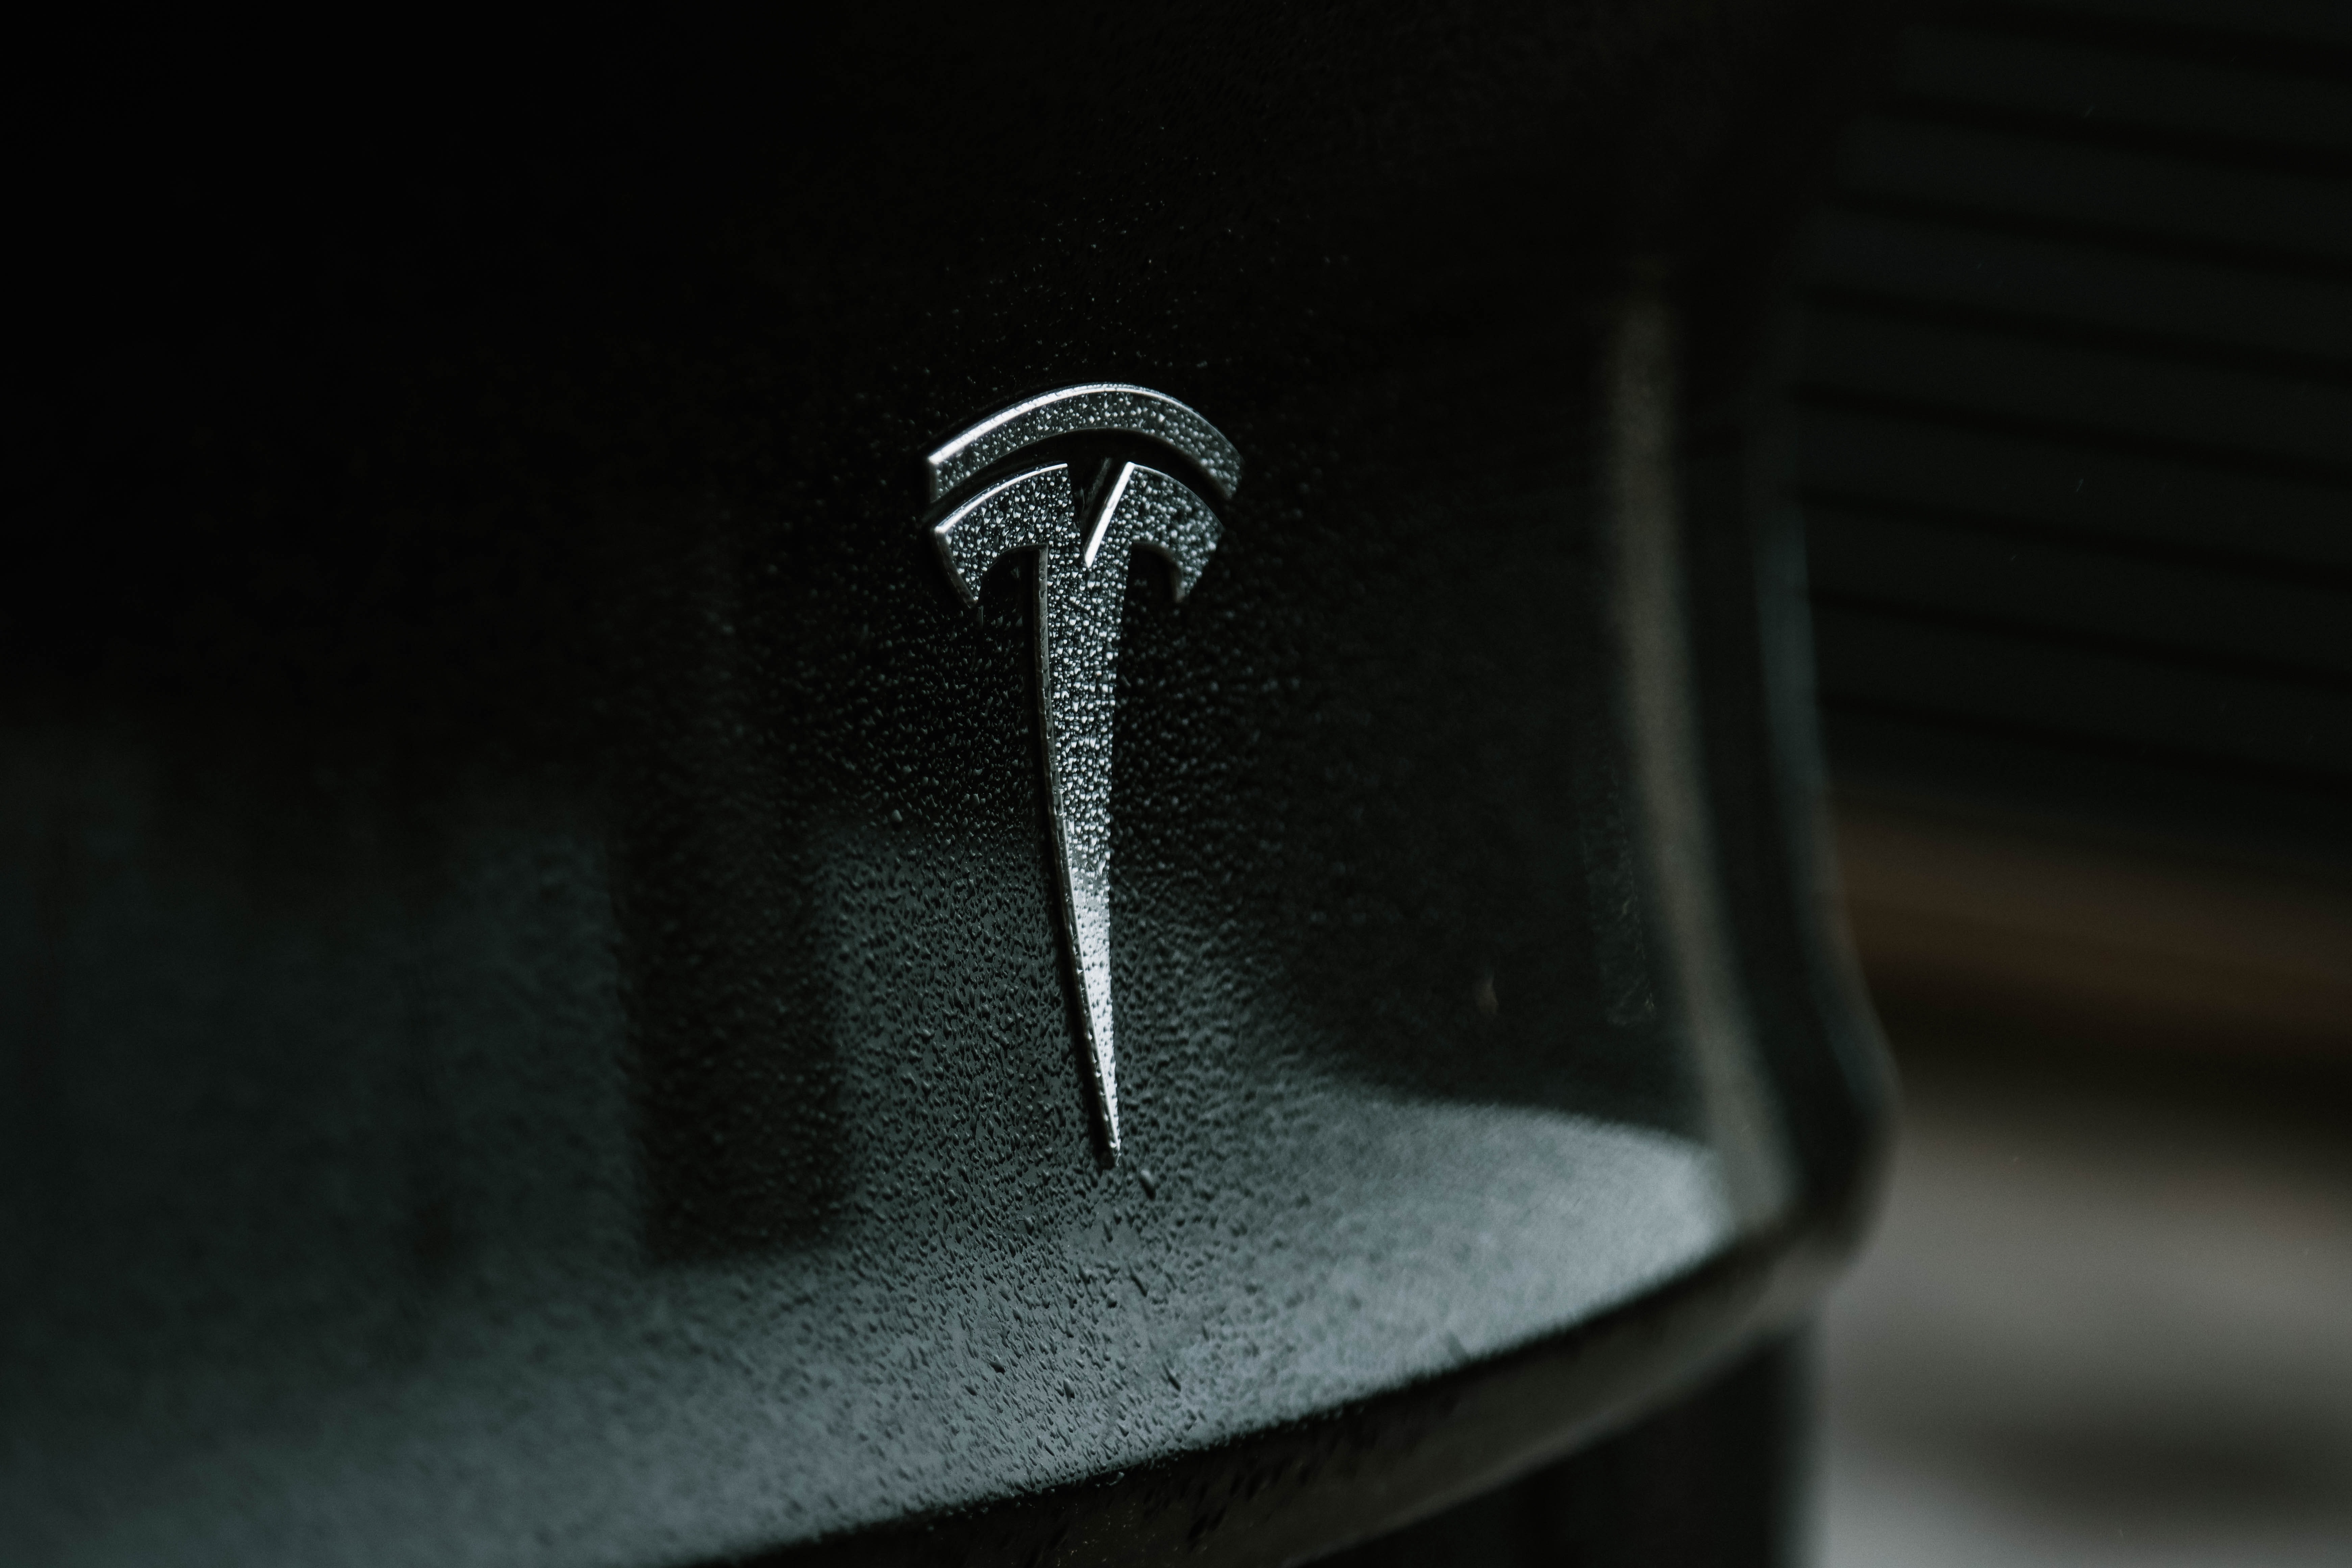 A close-up photo of the Tesla logo